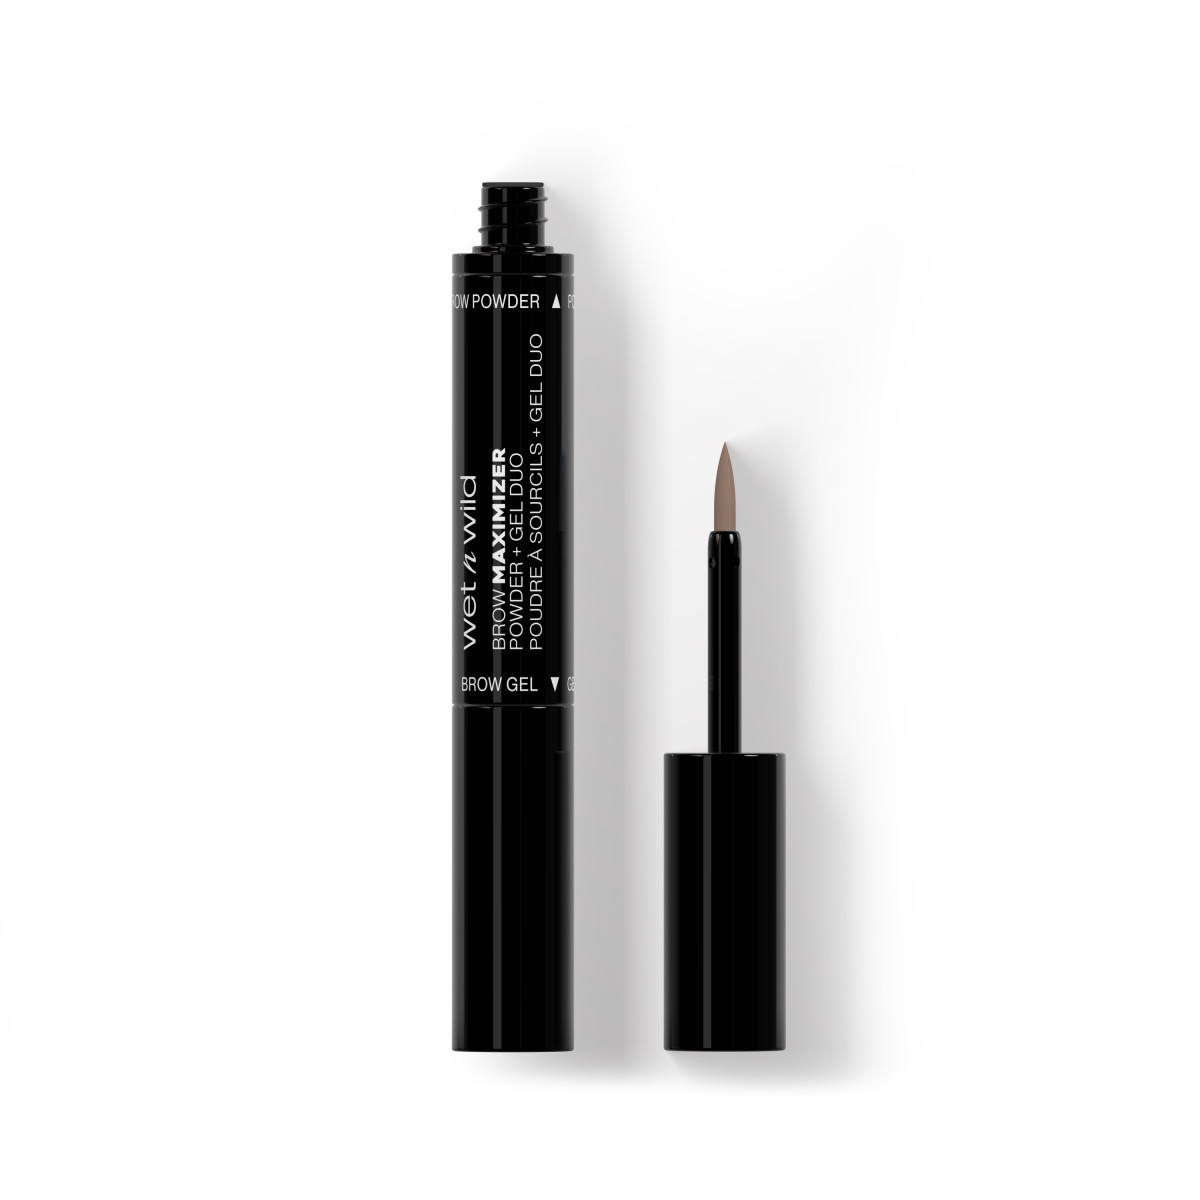 Chanel Le Crayon Sourcils Precision Brow Definer in Taupe